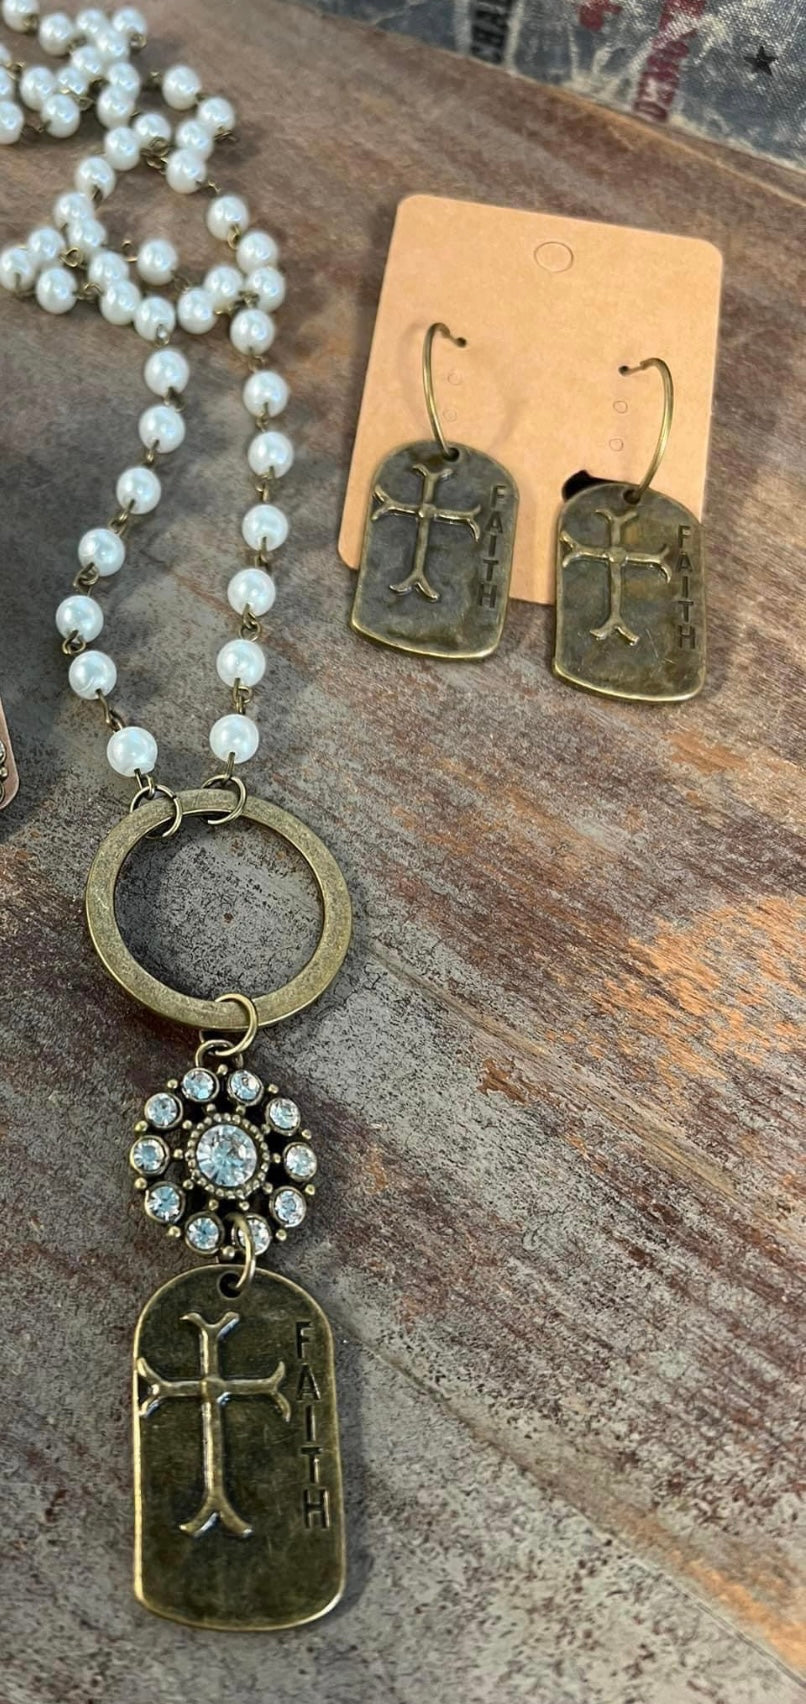 Faith cross pearl necklace and earrings